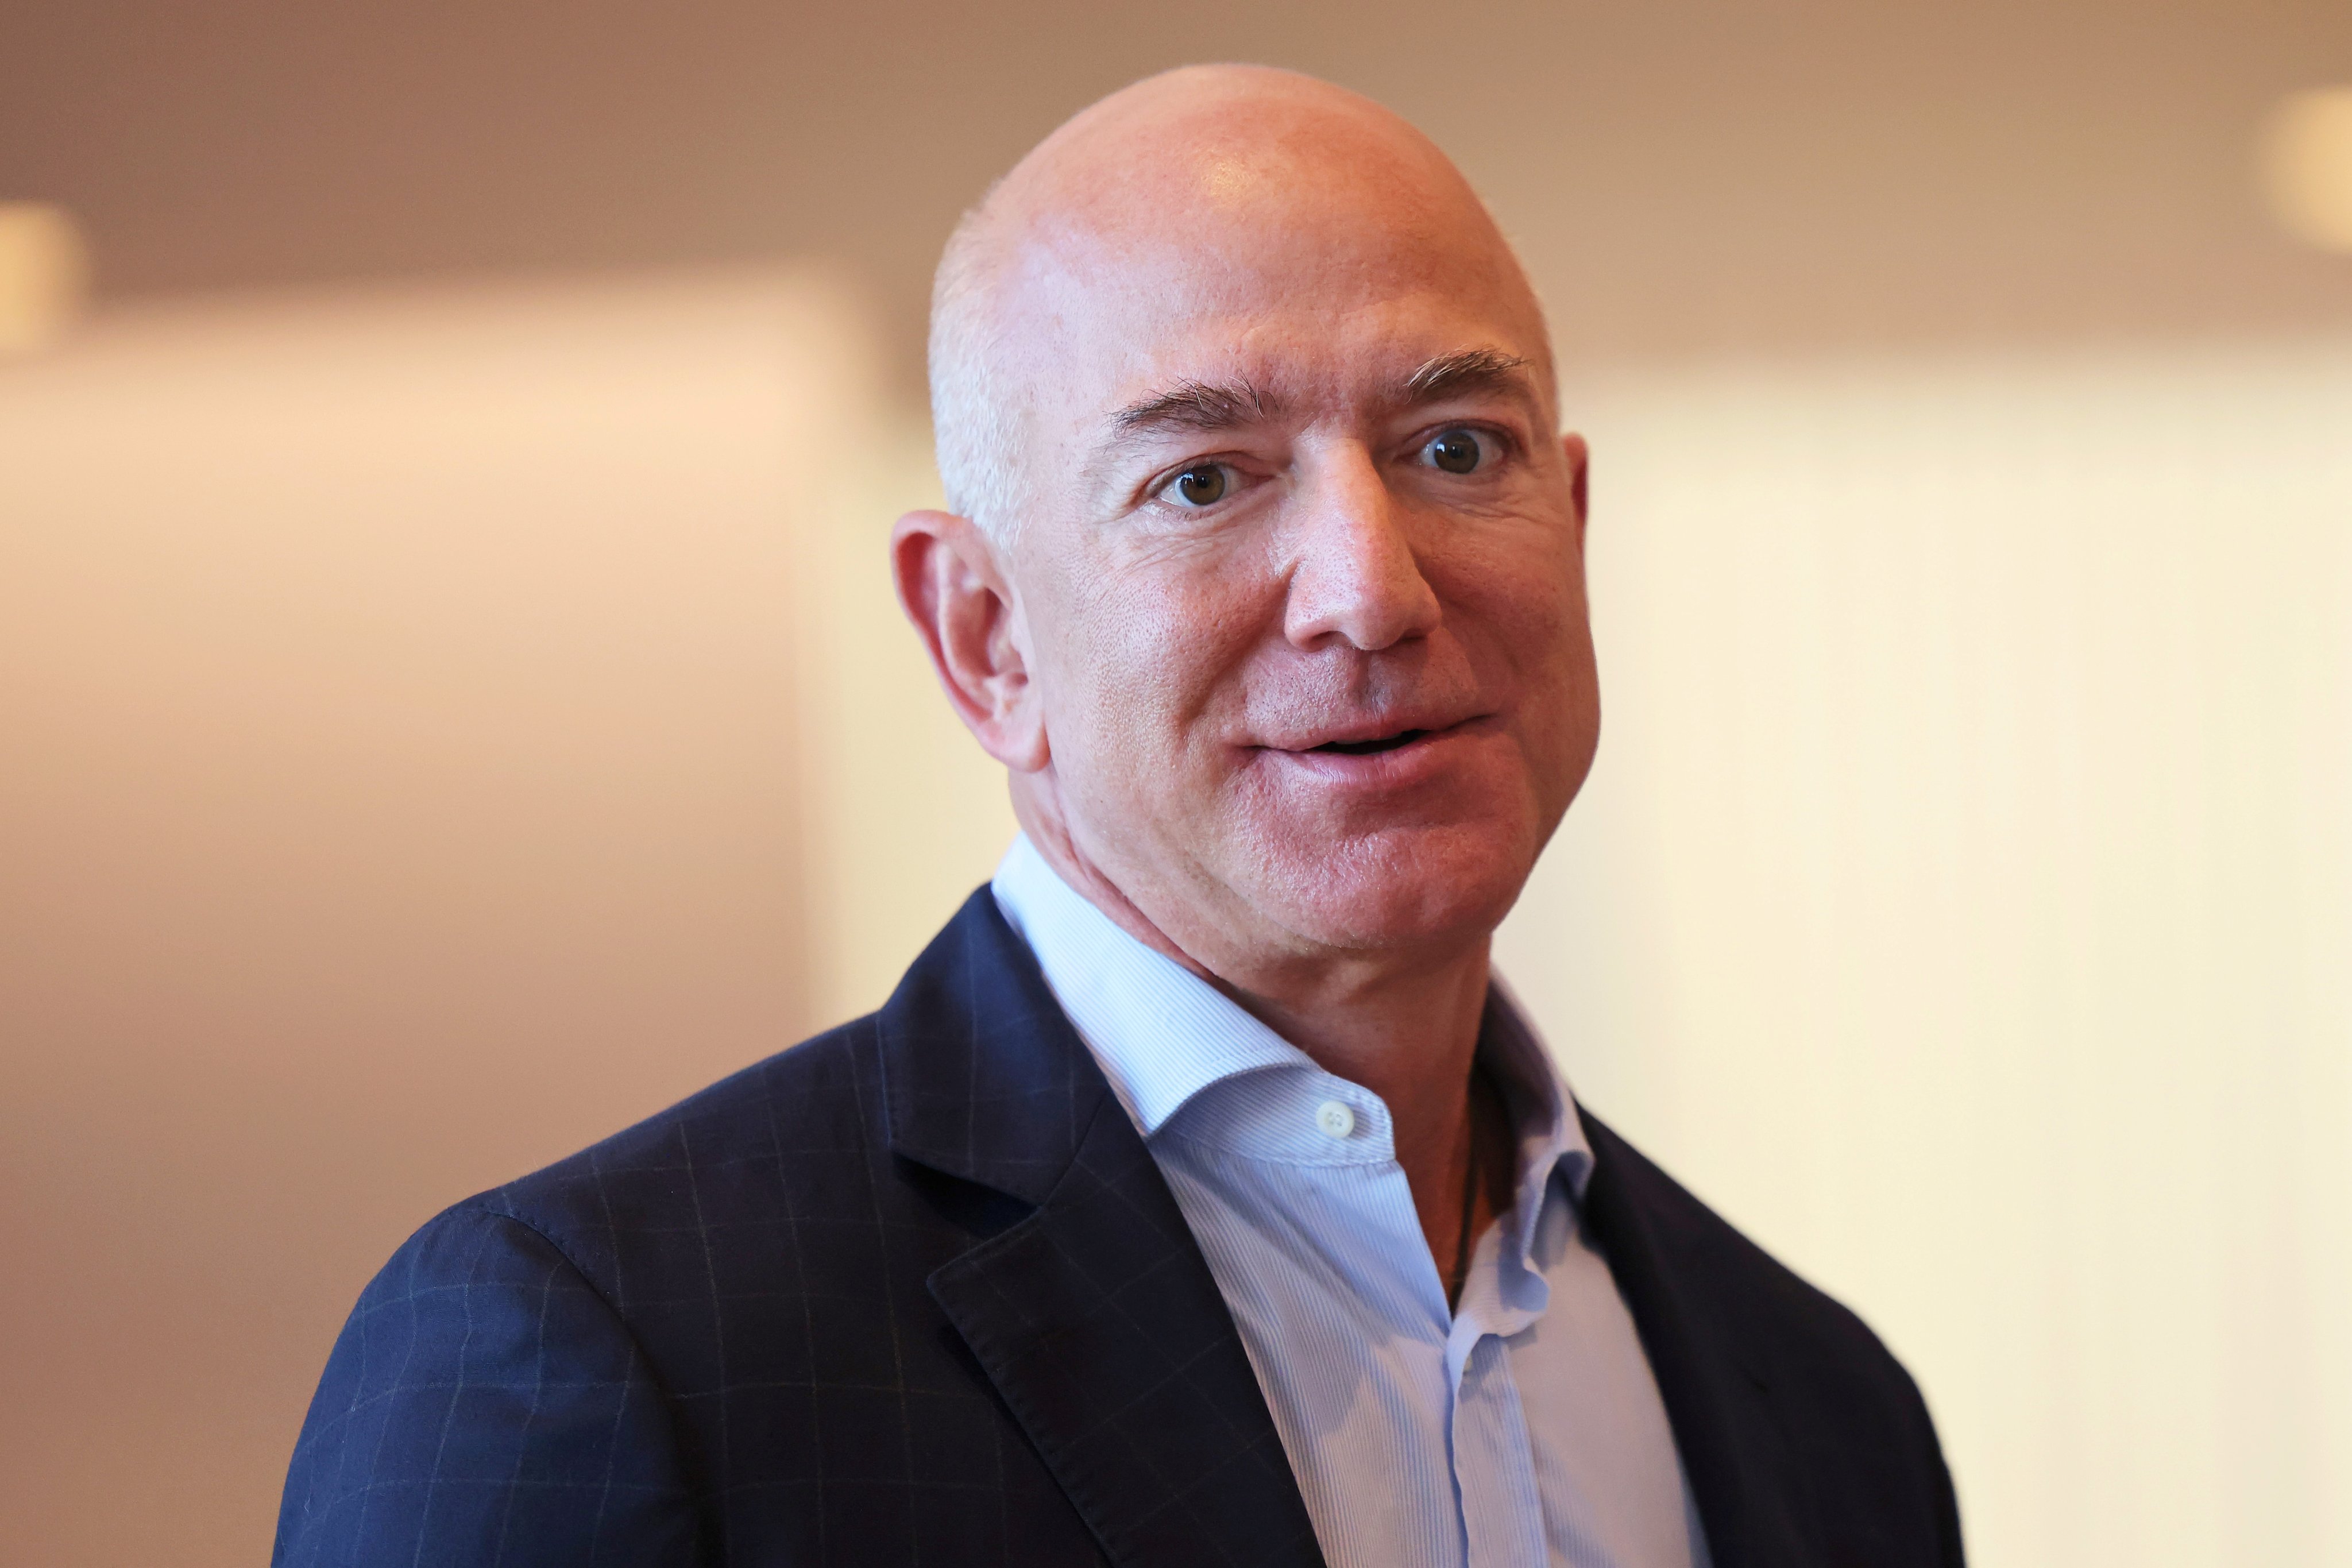 Billionaire American businessman Jeff Bezos. File photo: Reuters